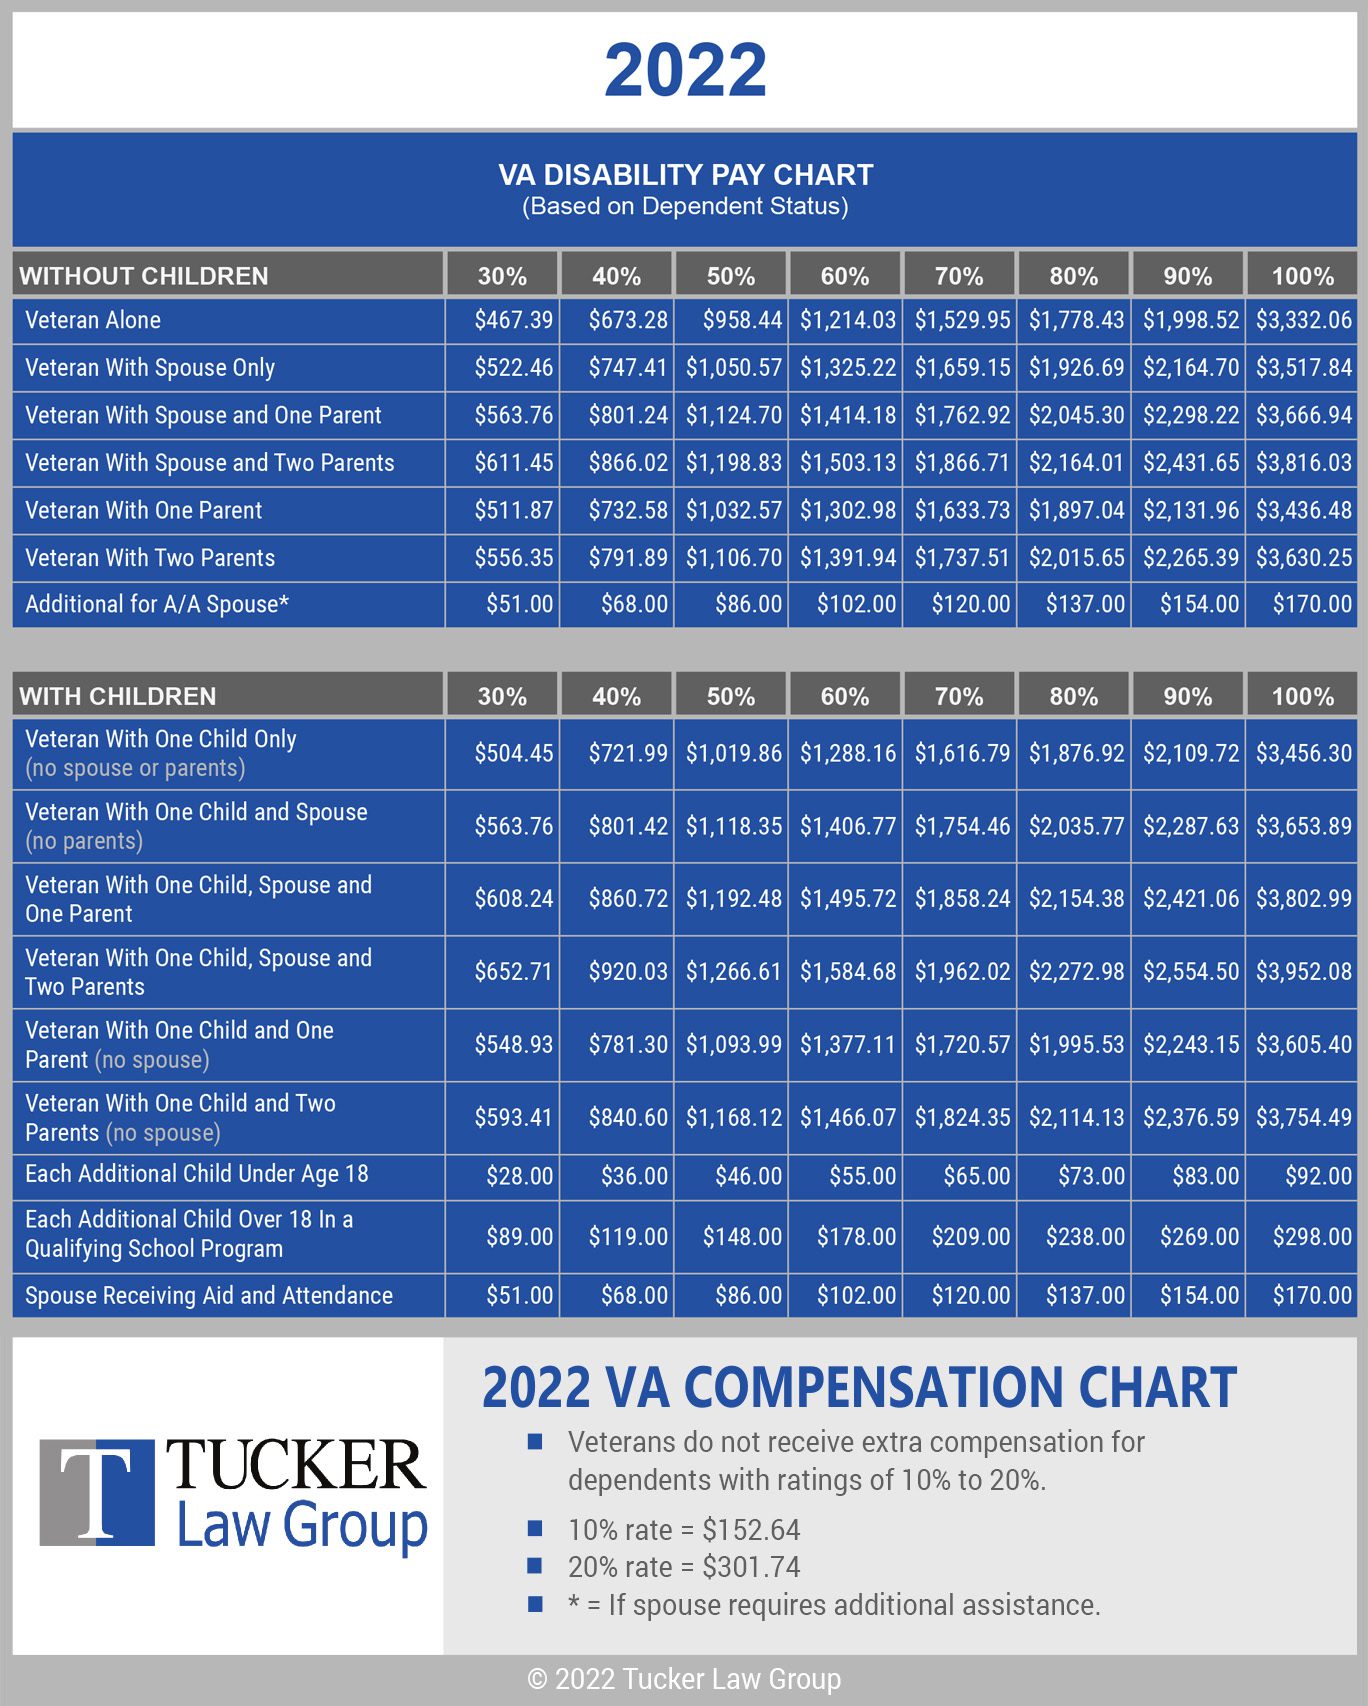 TLG VA Compensation Table 2022 VA Disability Pay Chart 